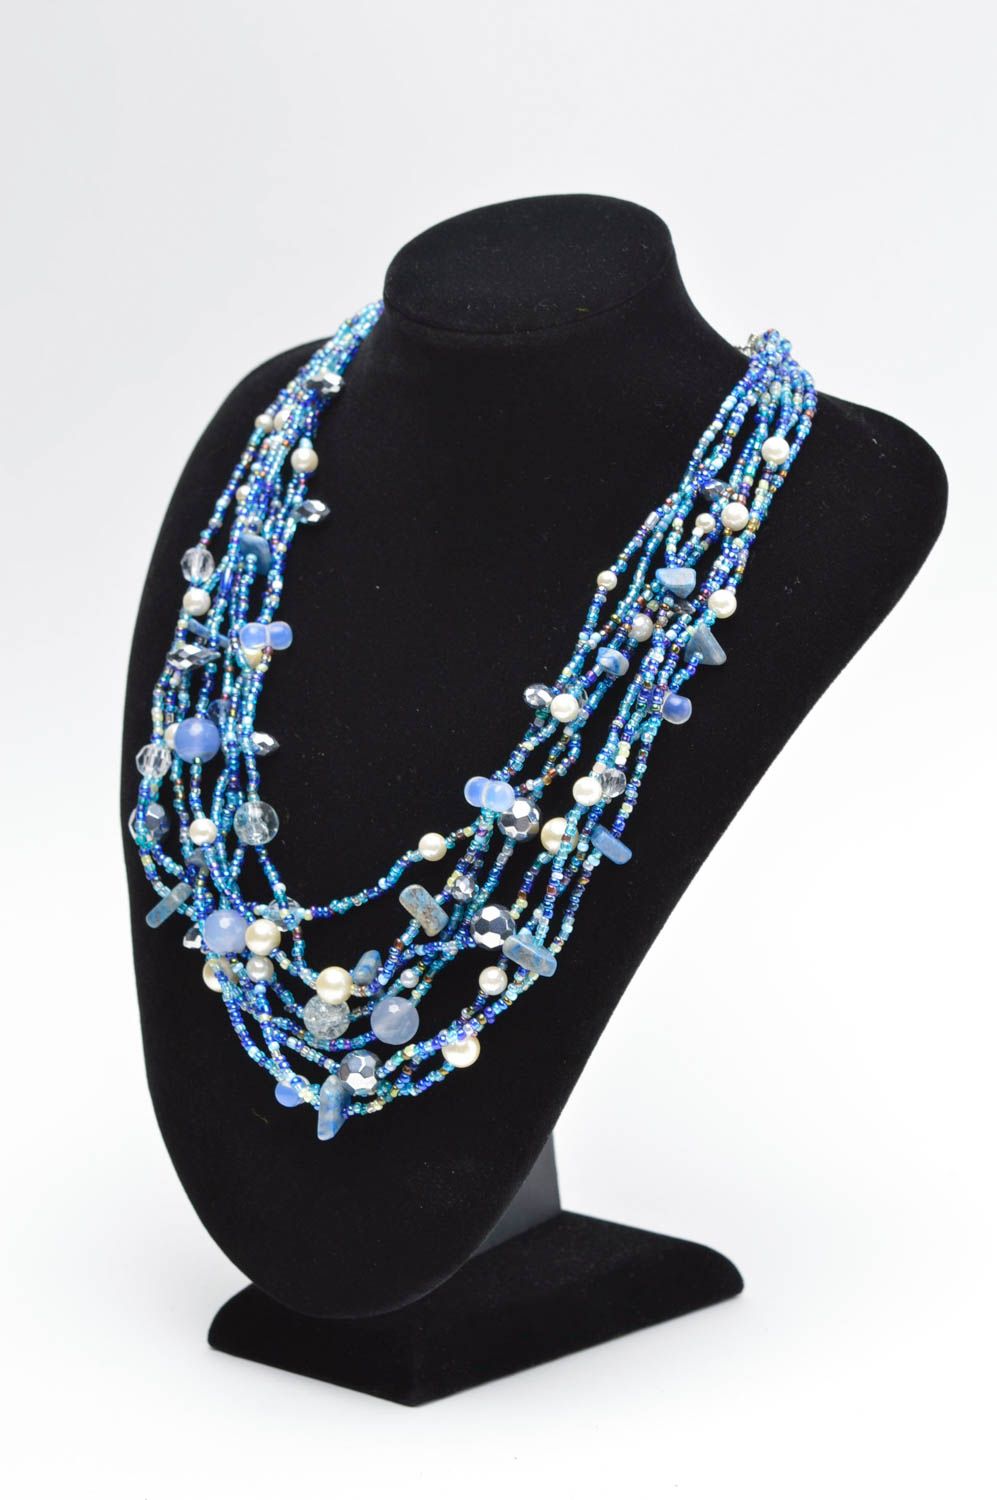 Handmade necklace beaded necklace designer accessory unusual jewelry gift ideas photo 5